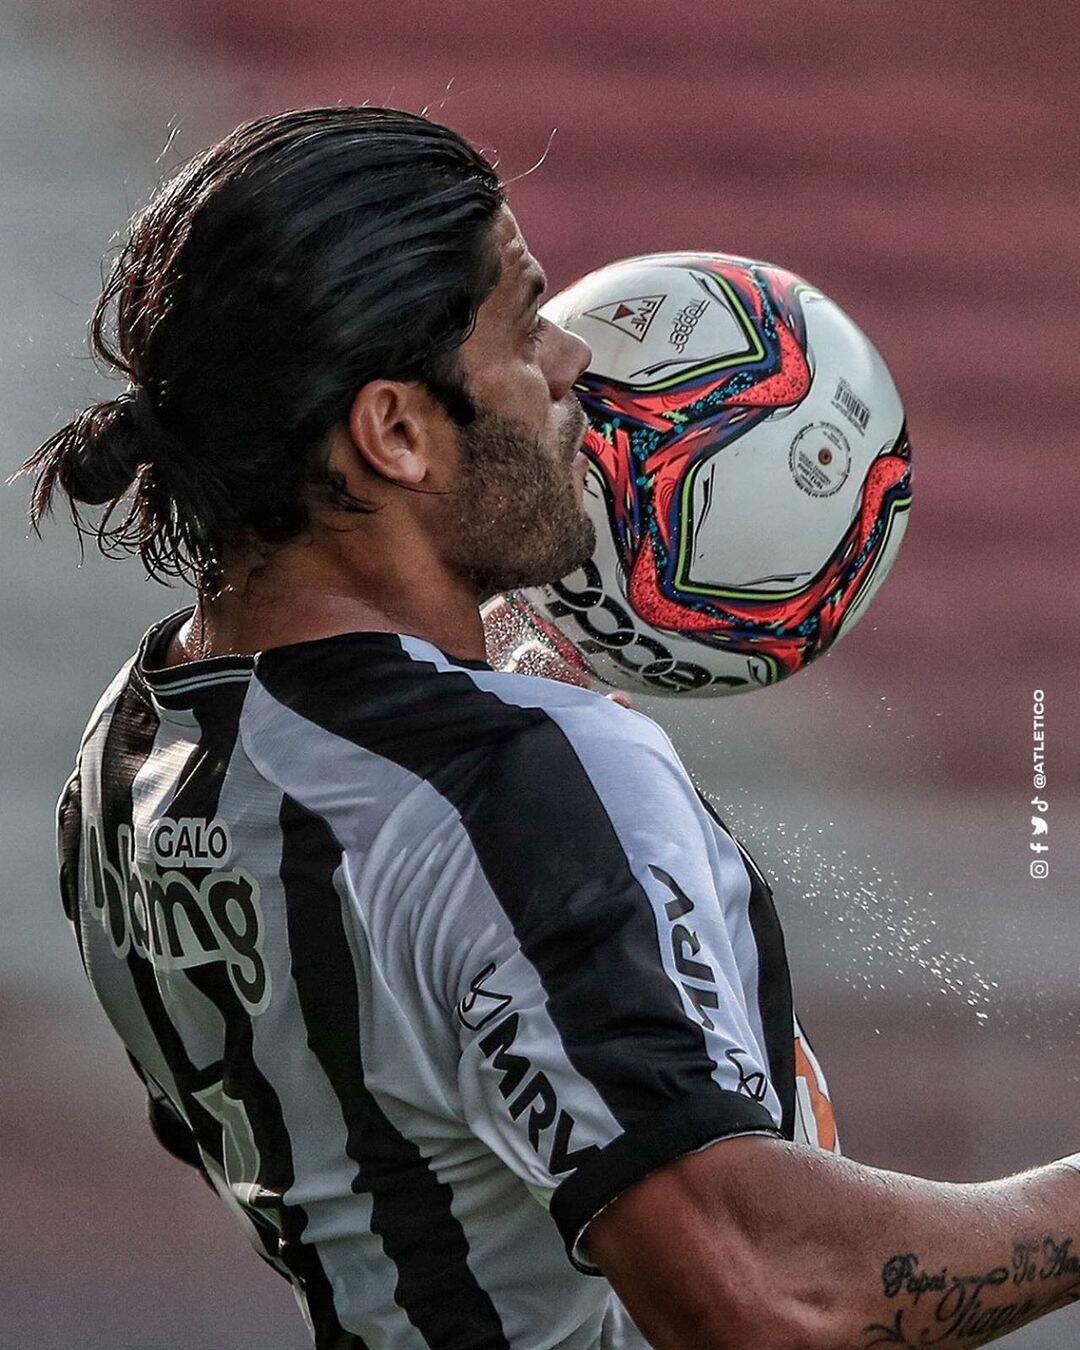 Foto: Instagram/Atlético-MG